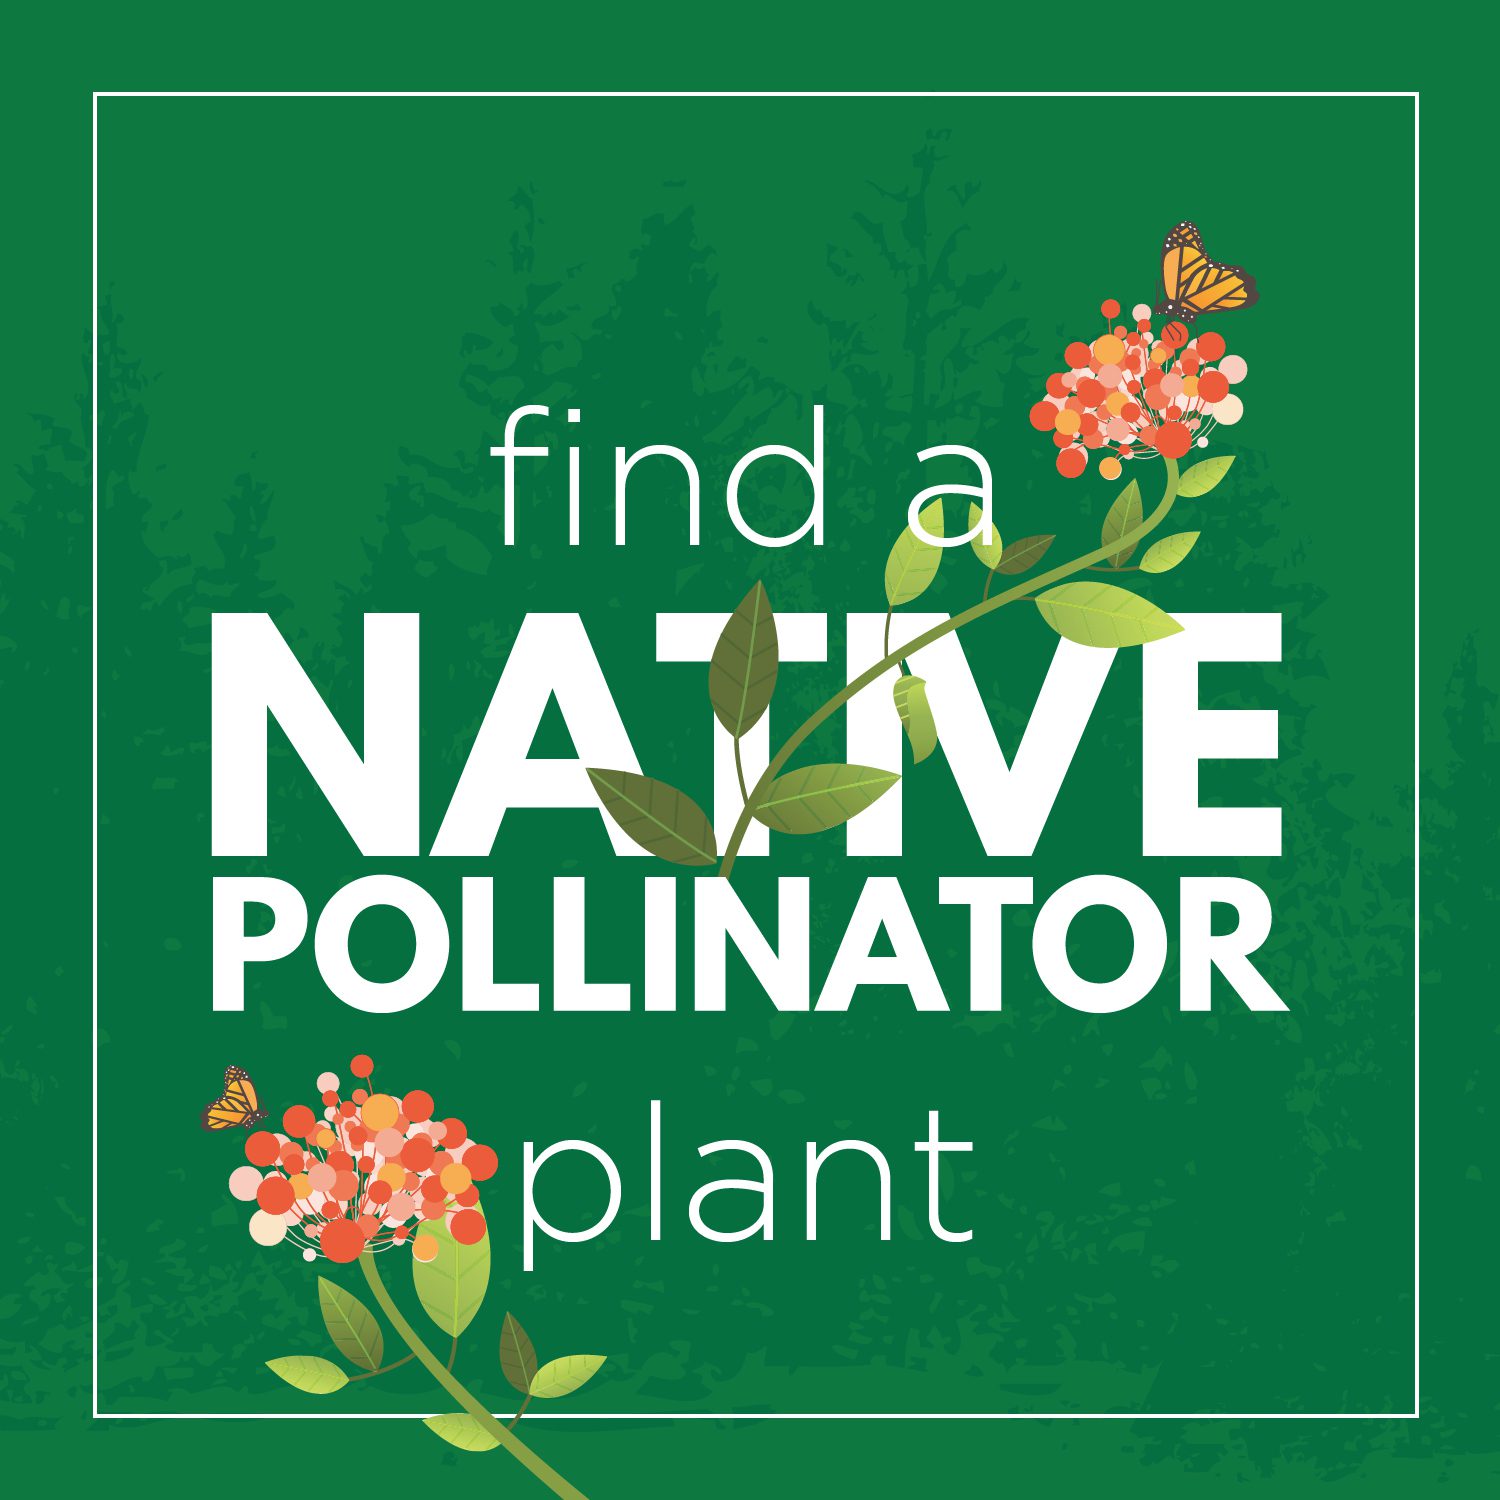 Find a Native Pollinator Plant